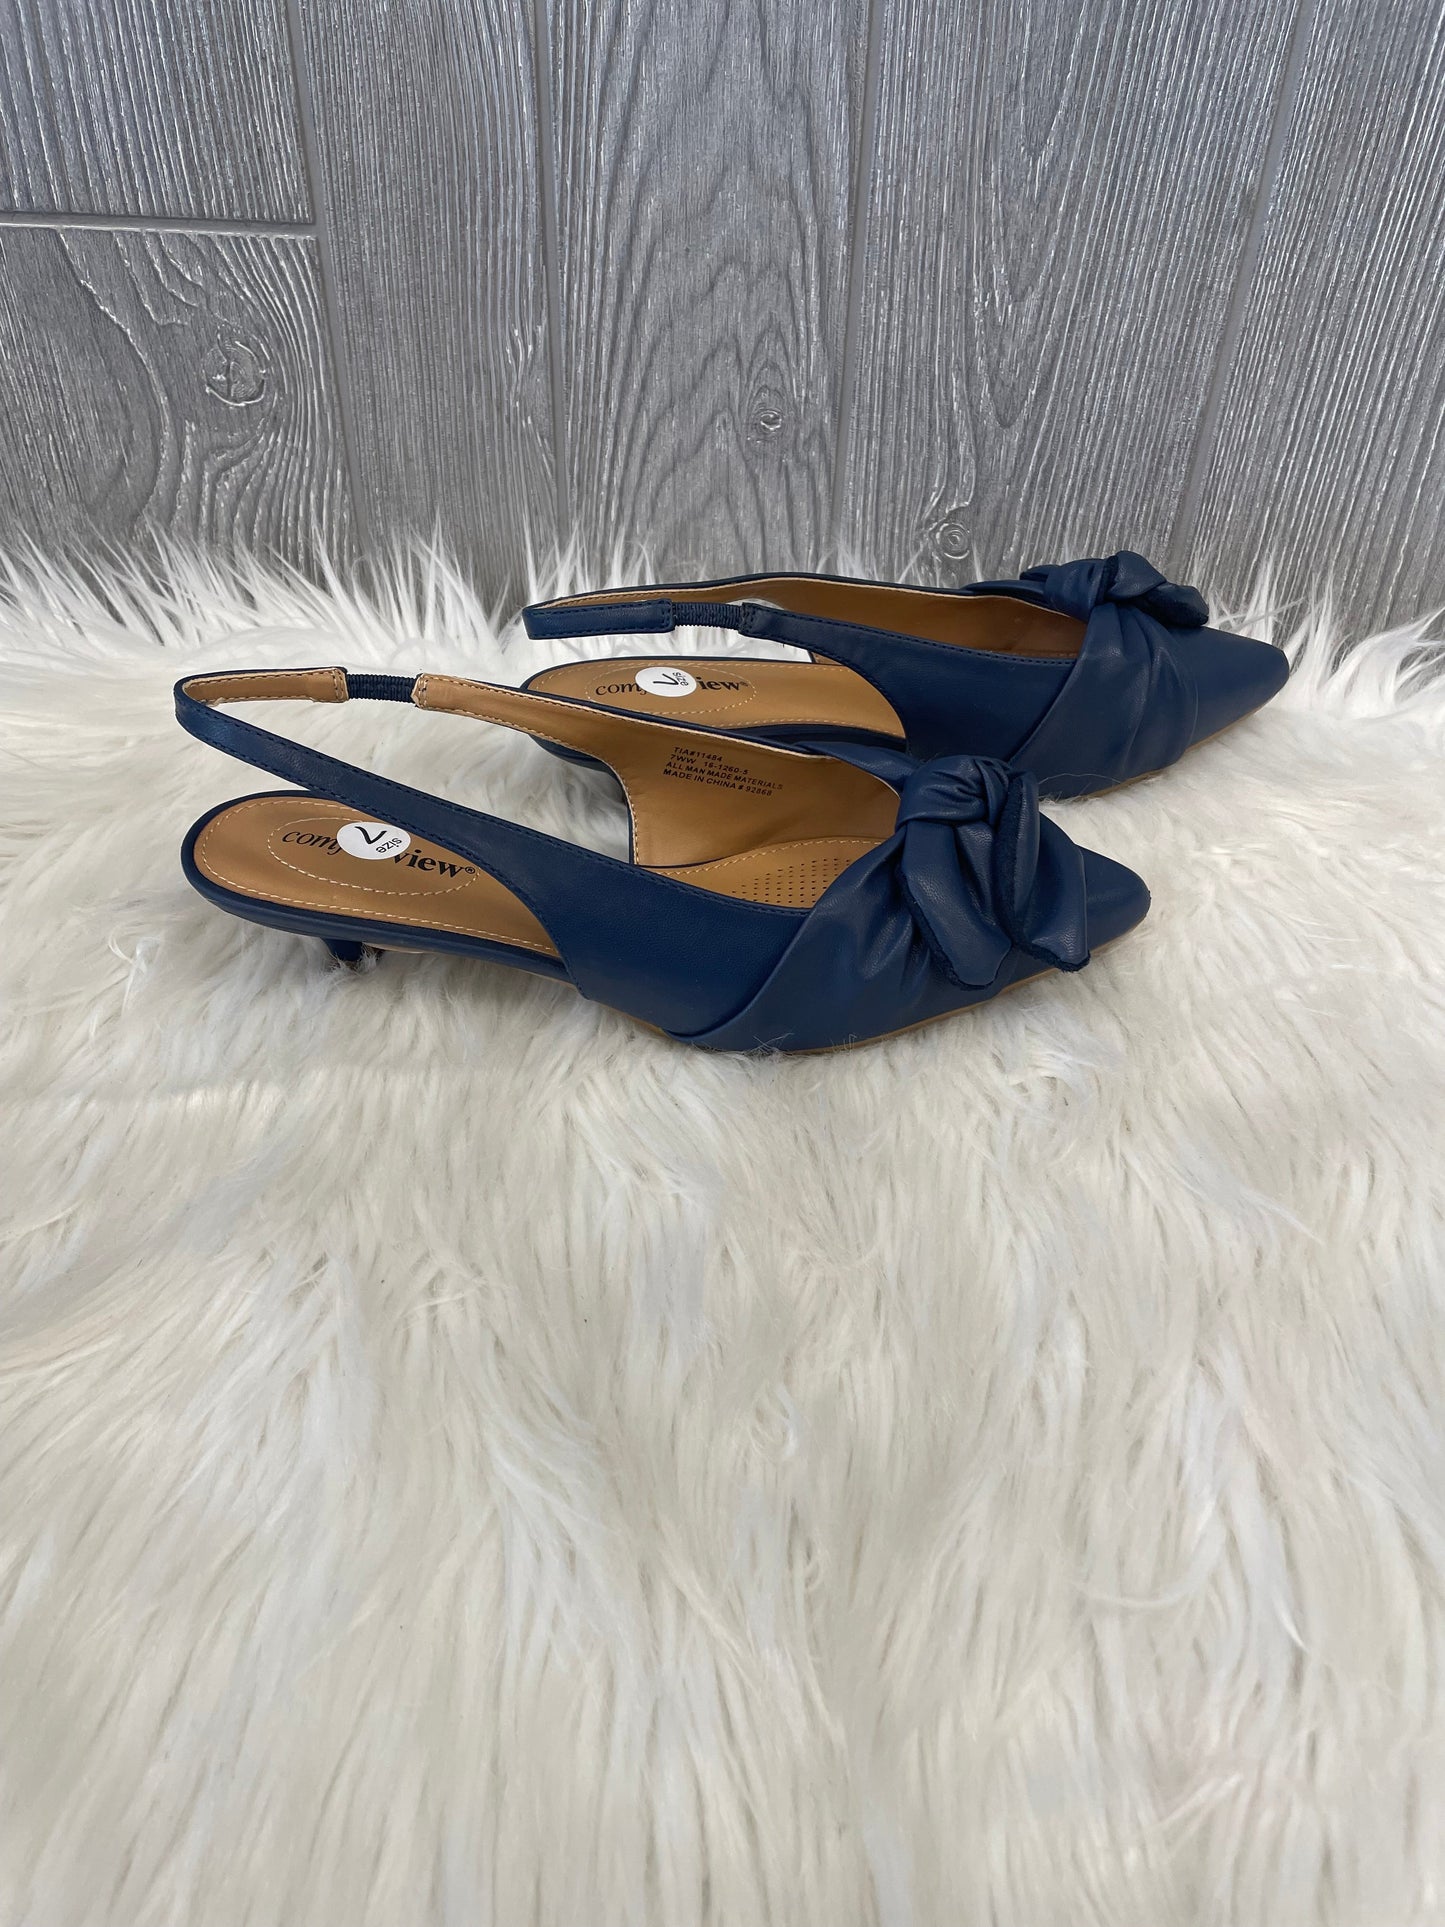 Blue Shoes Heels Stiletto Clothes Mentor, Size 7